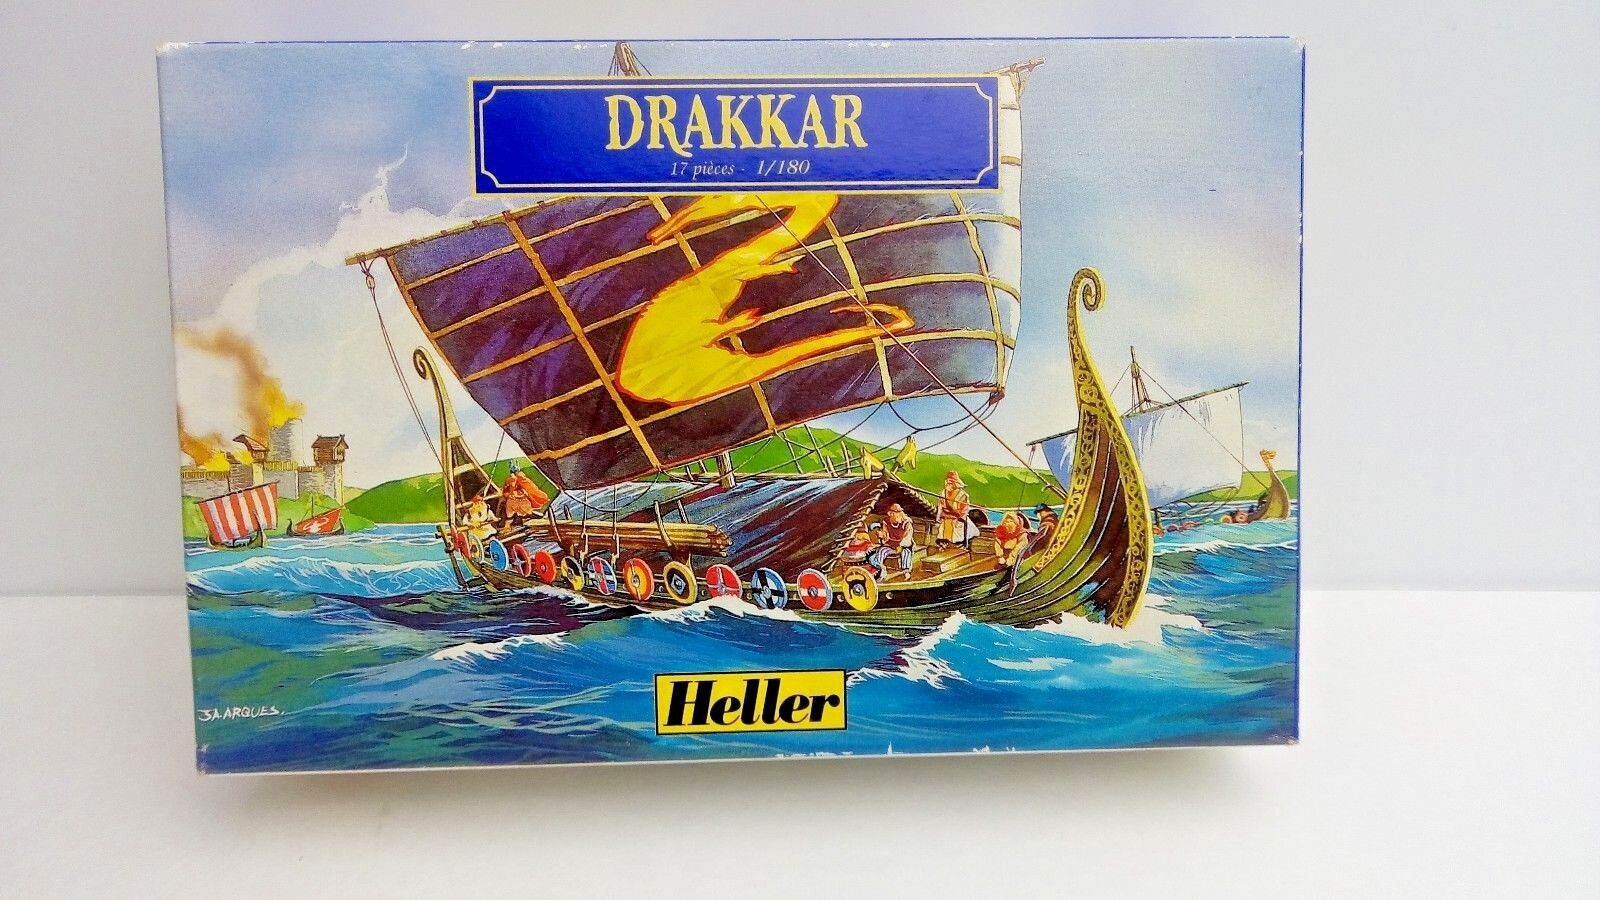 HELLER DRAKKAR  Kit 1/80 scale Perfect Factory Box Complete Kit 17 pc  GREAT ART